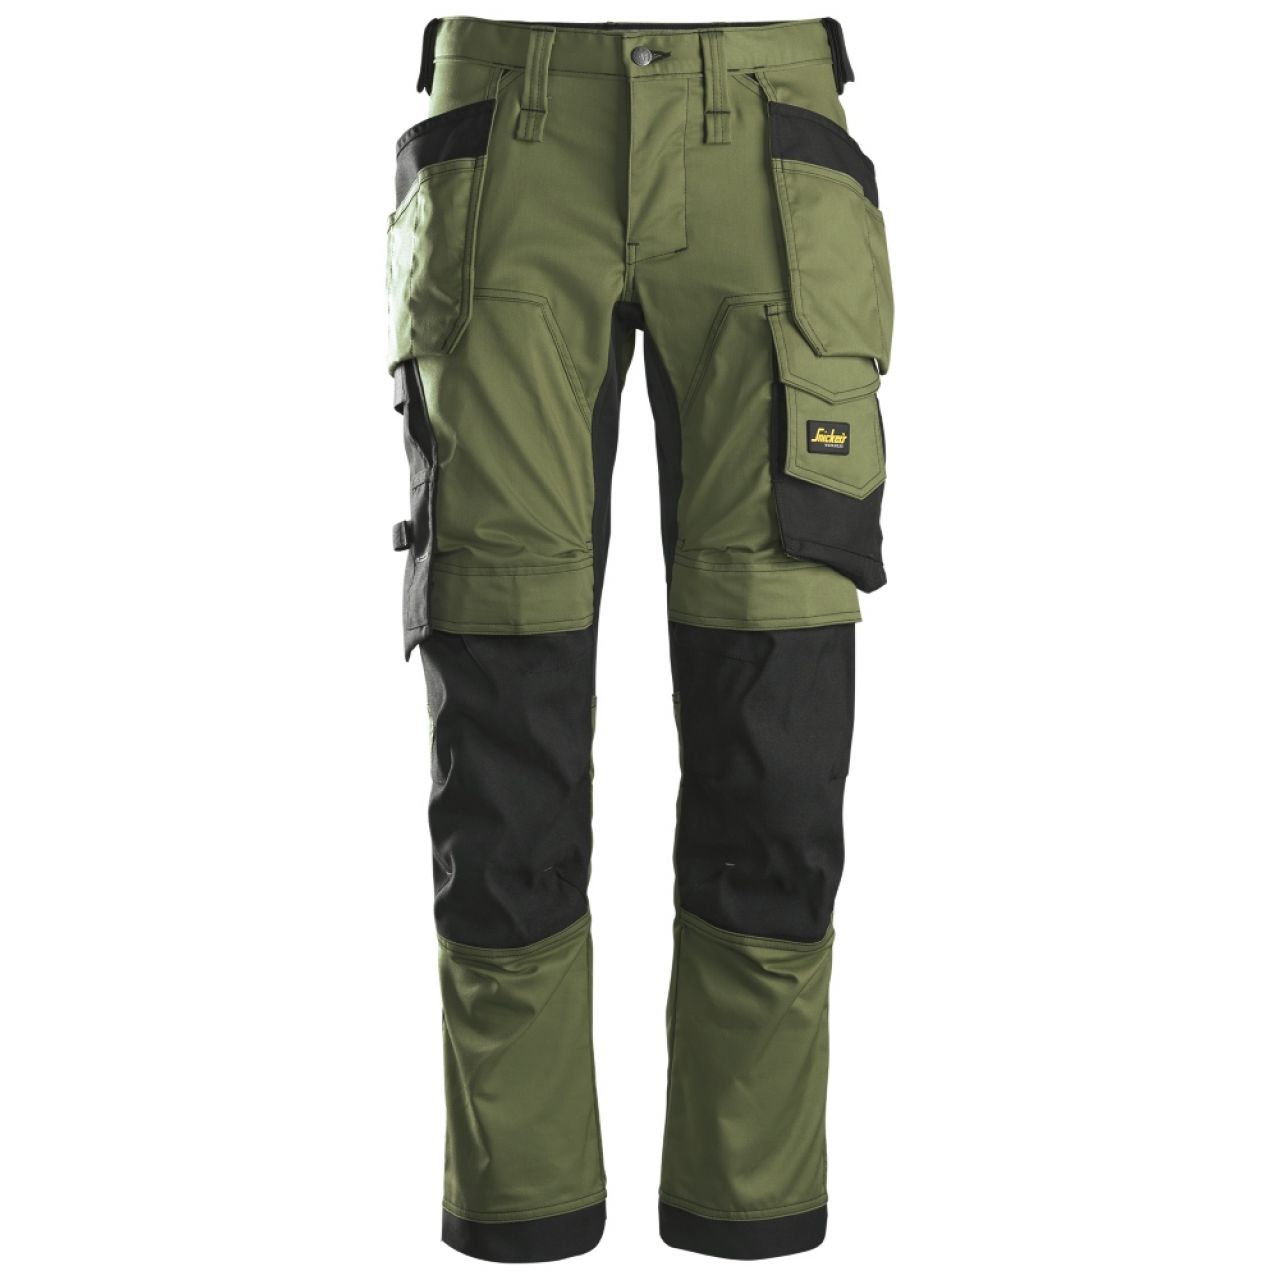 6241 Pantalones largos de trabajo elásticos con bolsillos flotantes AllroundWork verde khaki-negro talla 44